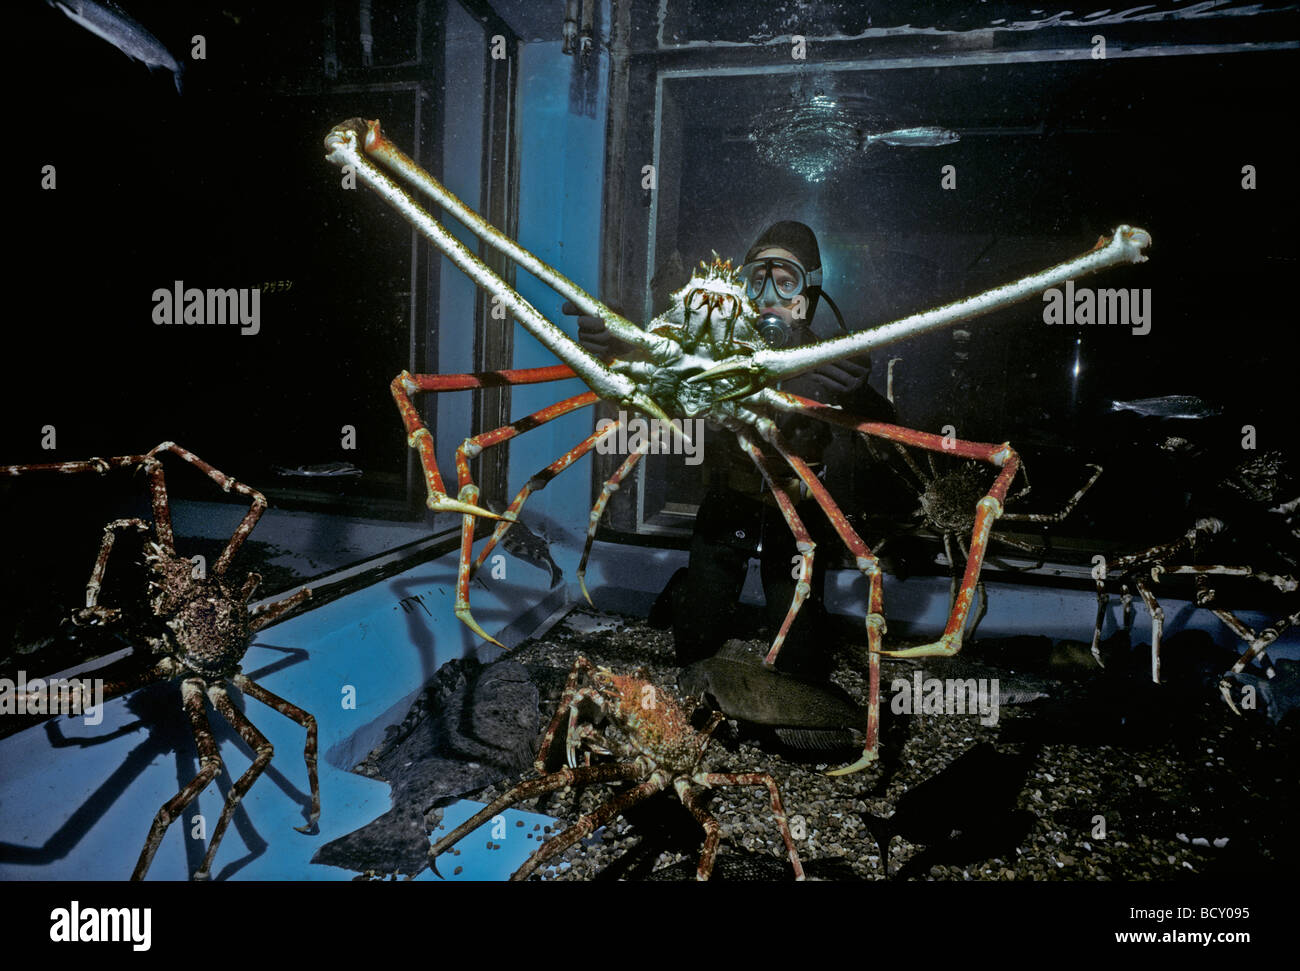 Japanese Giant Spider Crab Macrocheira Kaempferi World S Largest Crustacean Tokyo Aquarium Japan Stock Photo Alamy